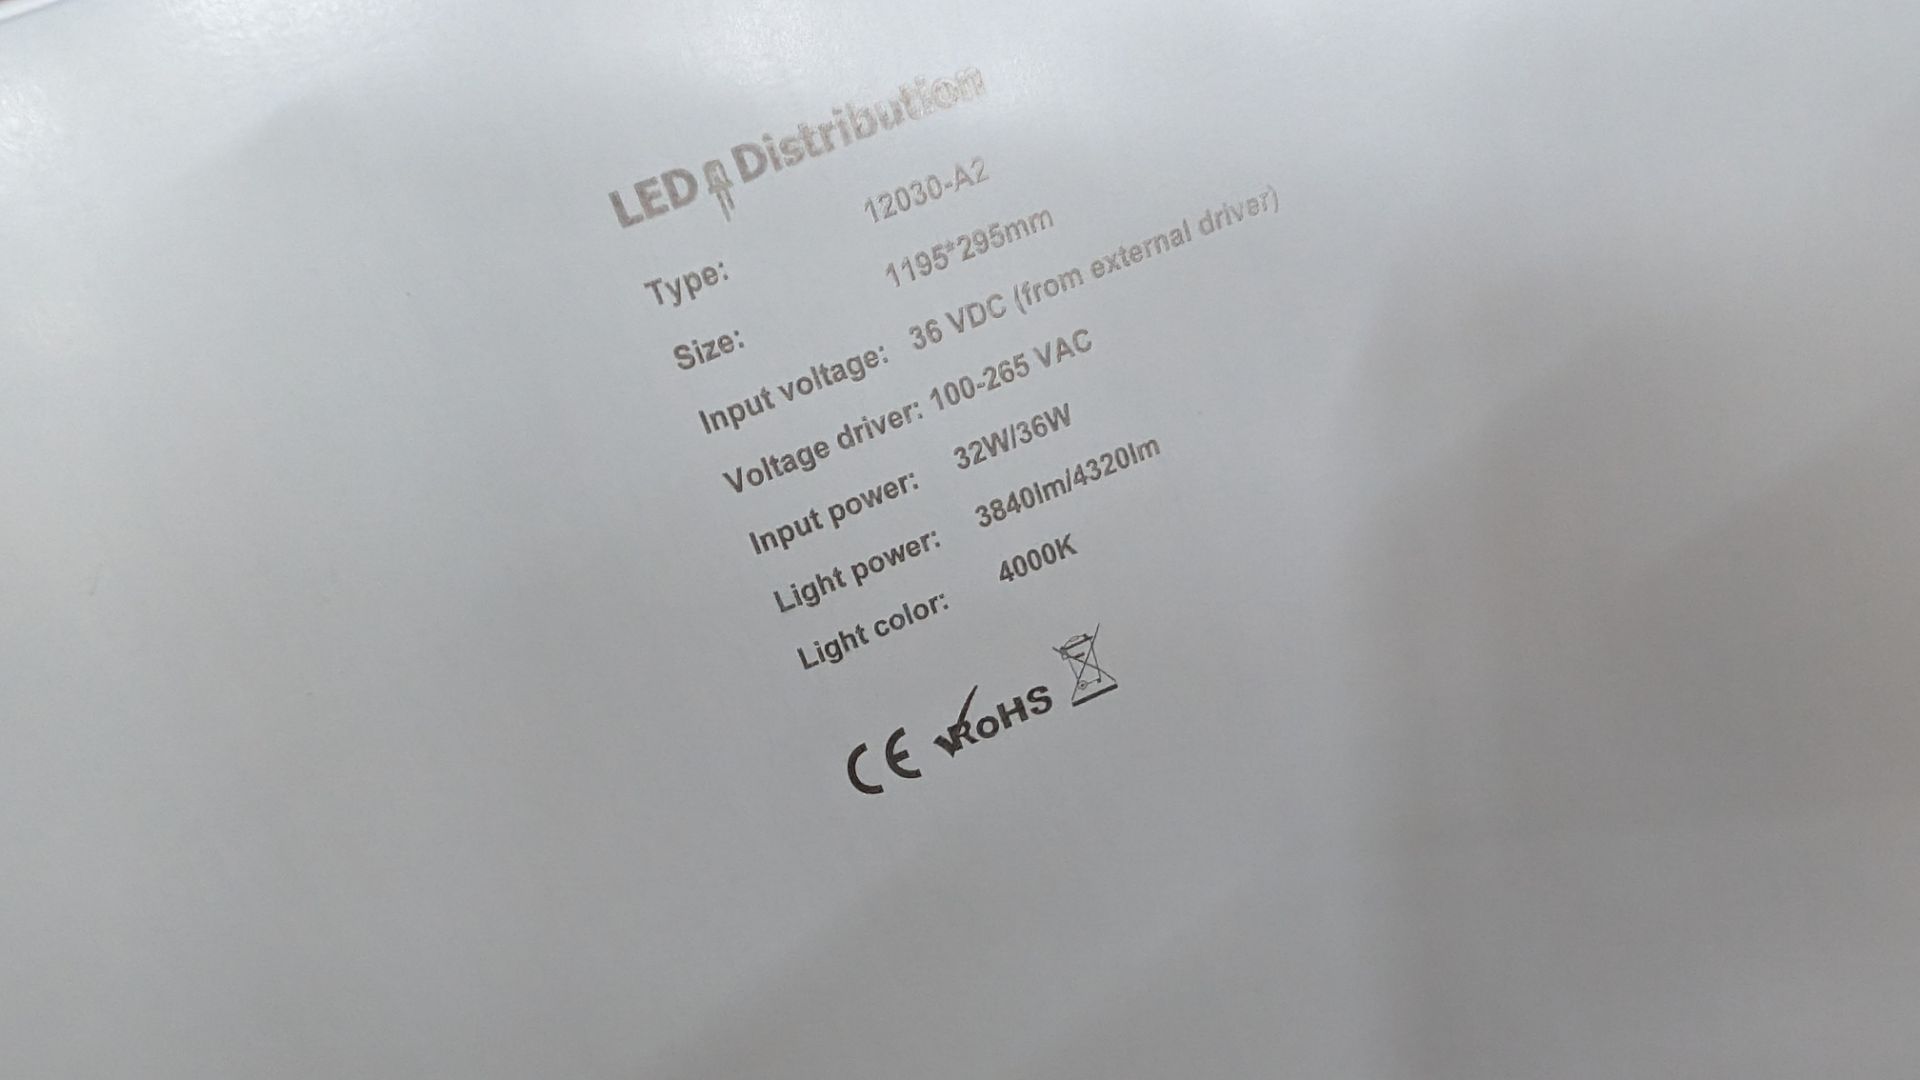 26 off Elegance Premium Eco 1195mm x 295mm LED lighting panels. 4000k. 32/36w input power. 36w dr - Bild 5 aus 7